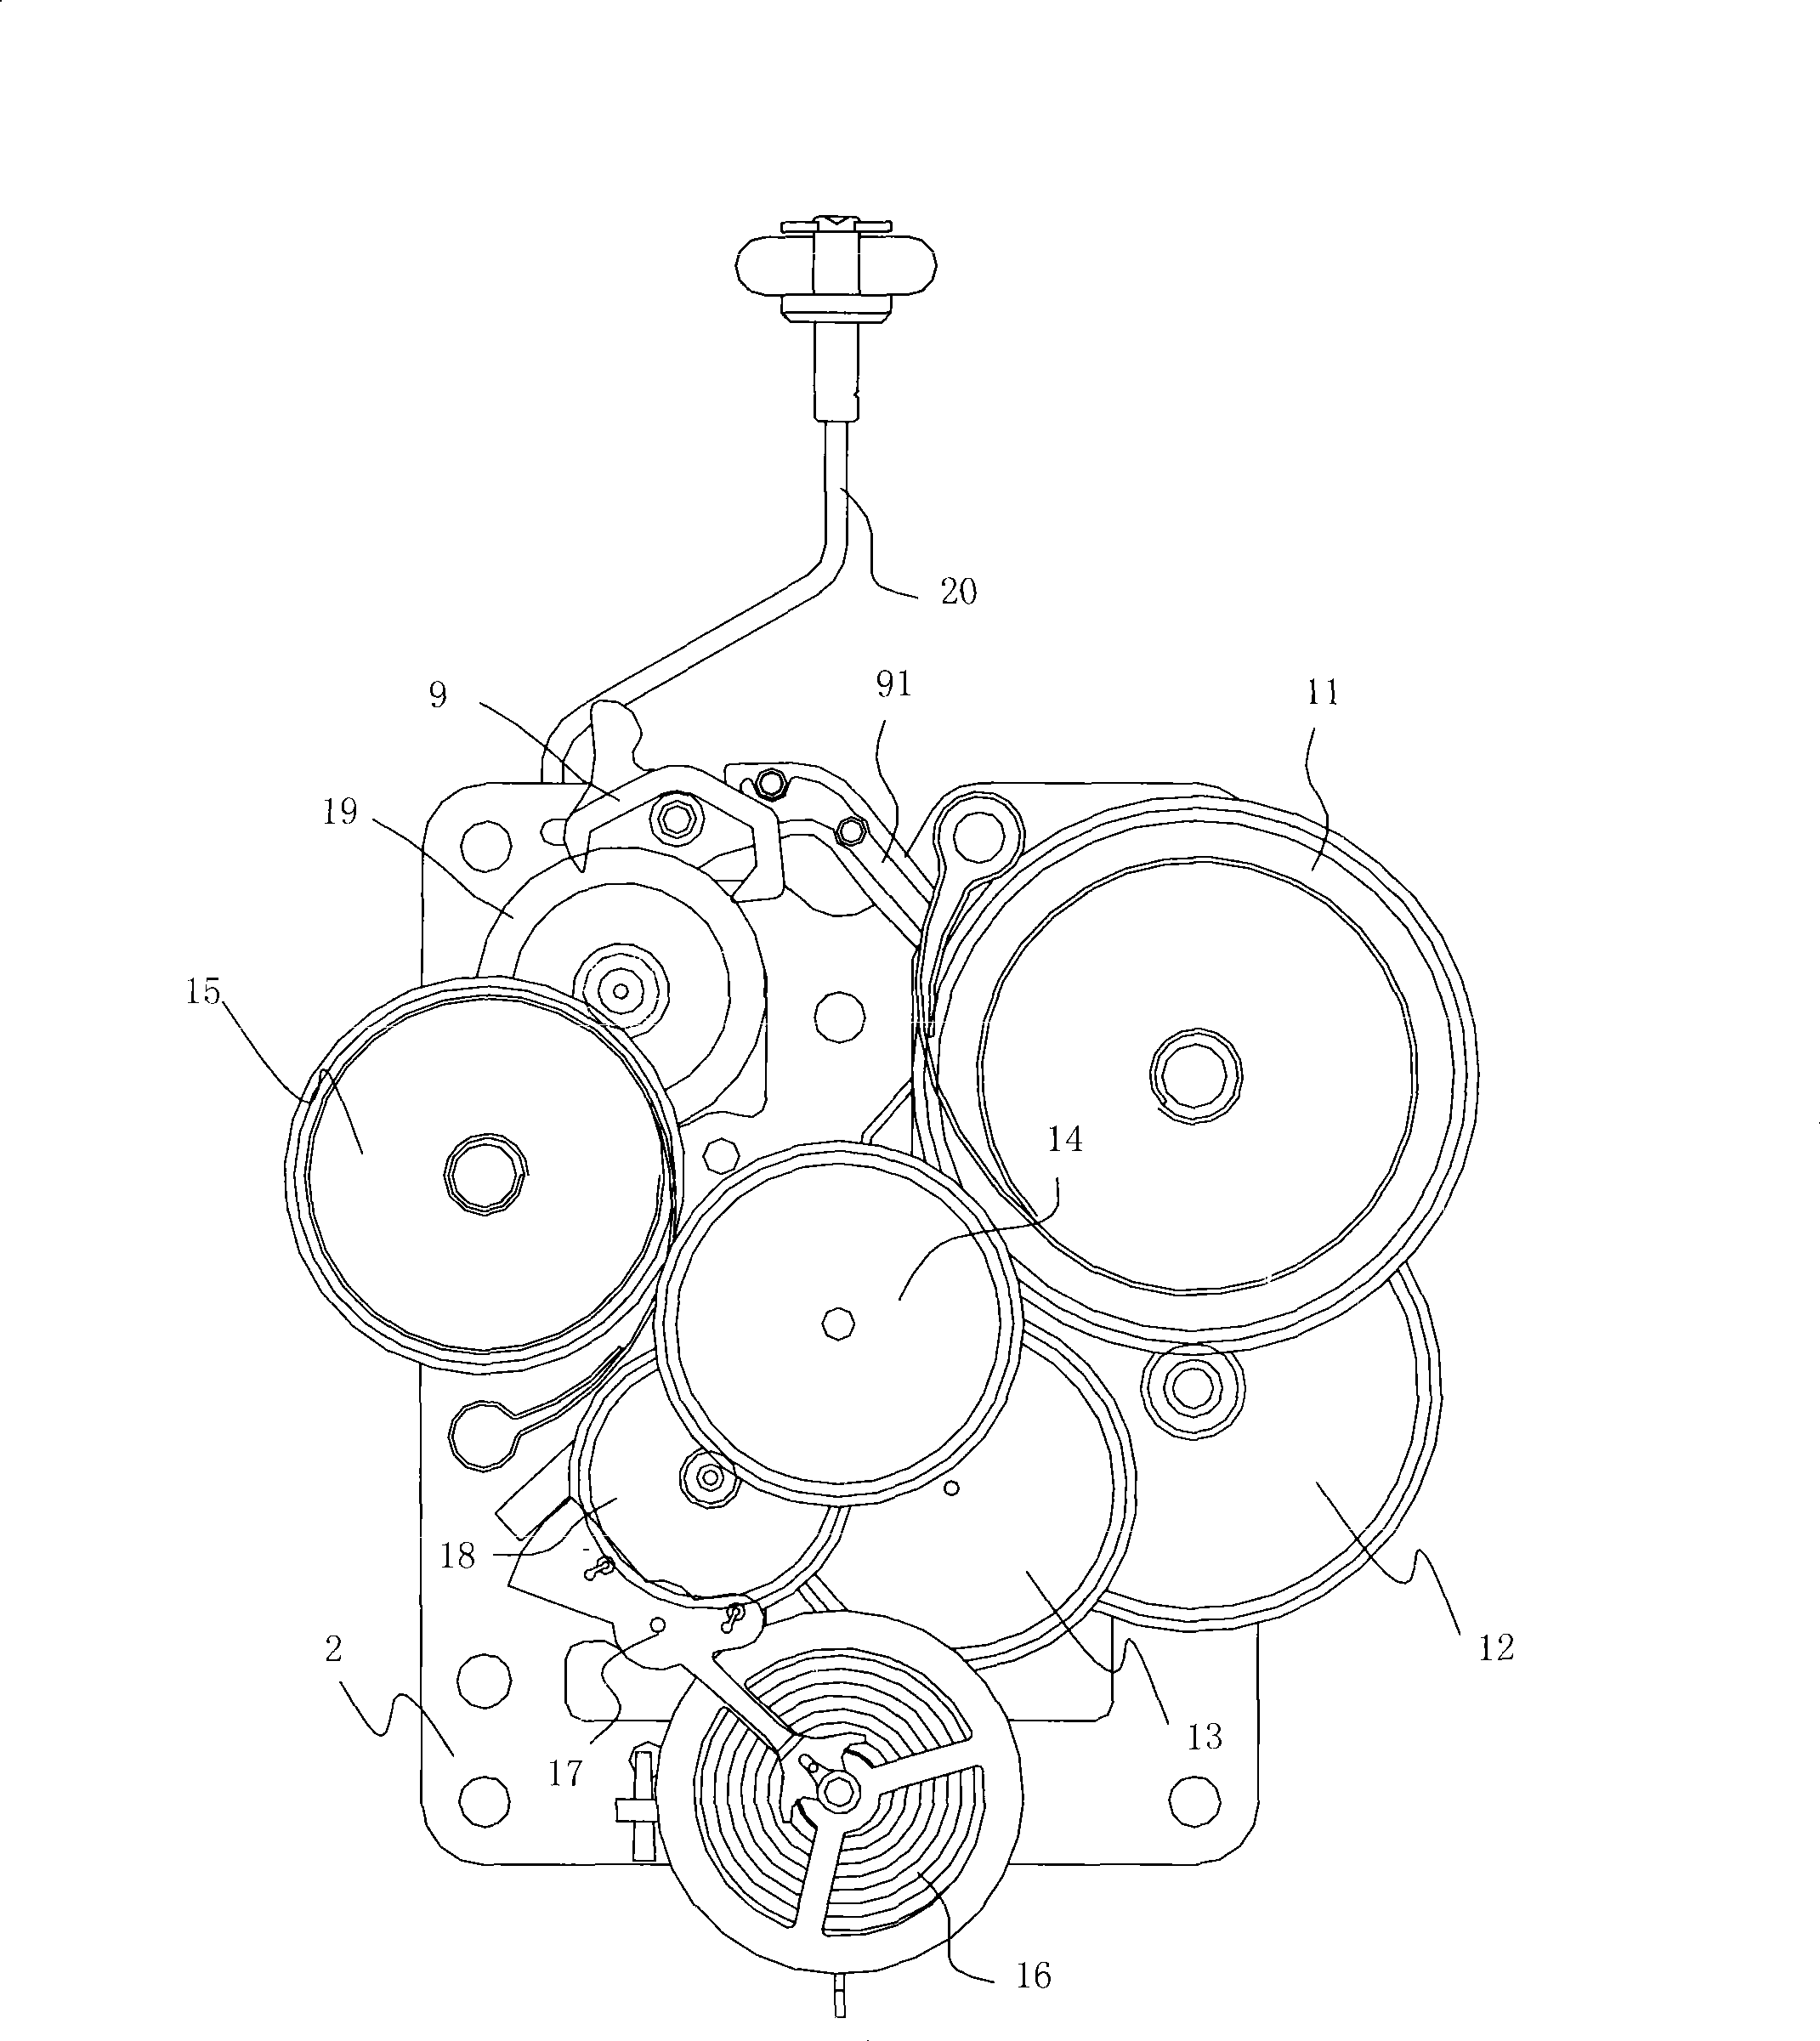 Movement apparatus of mechanical clock with three-segment gradually alarming function